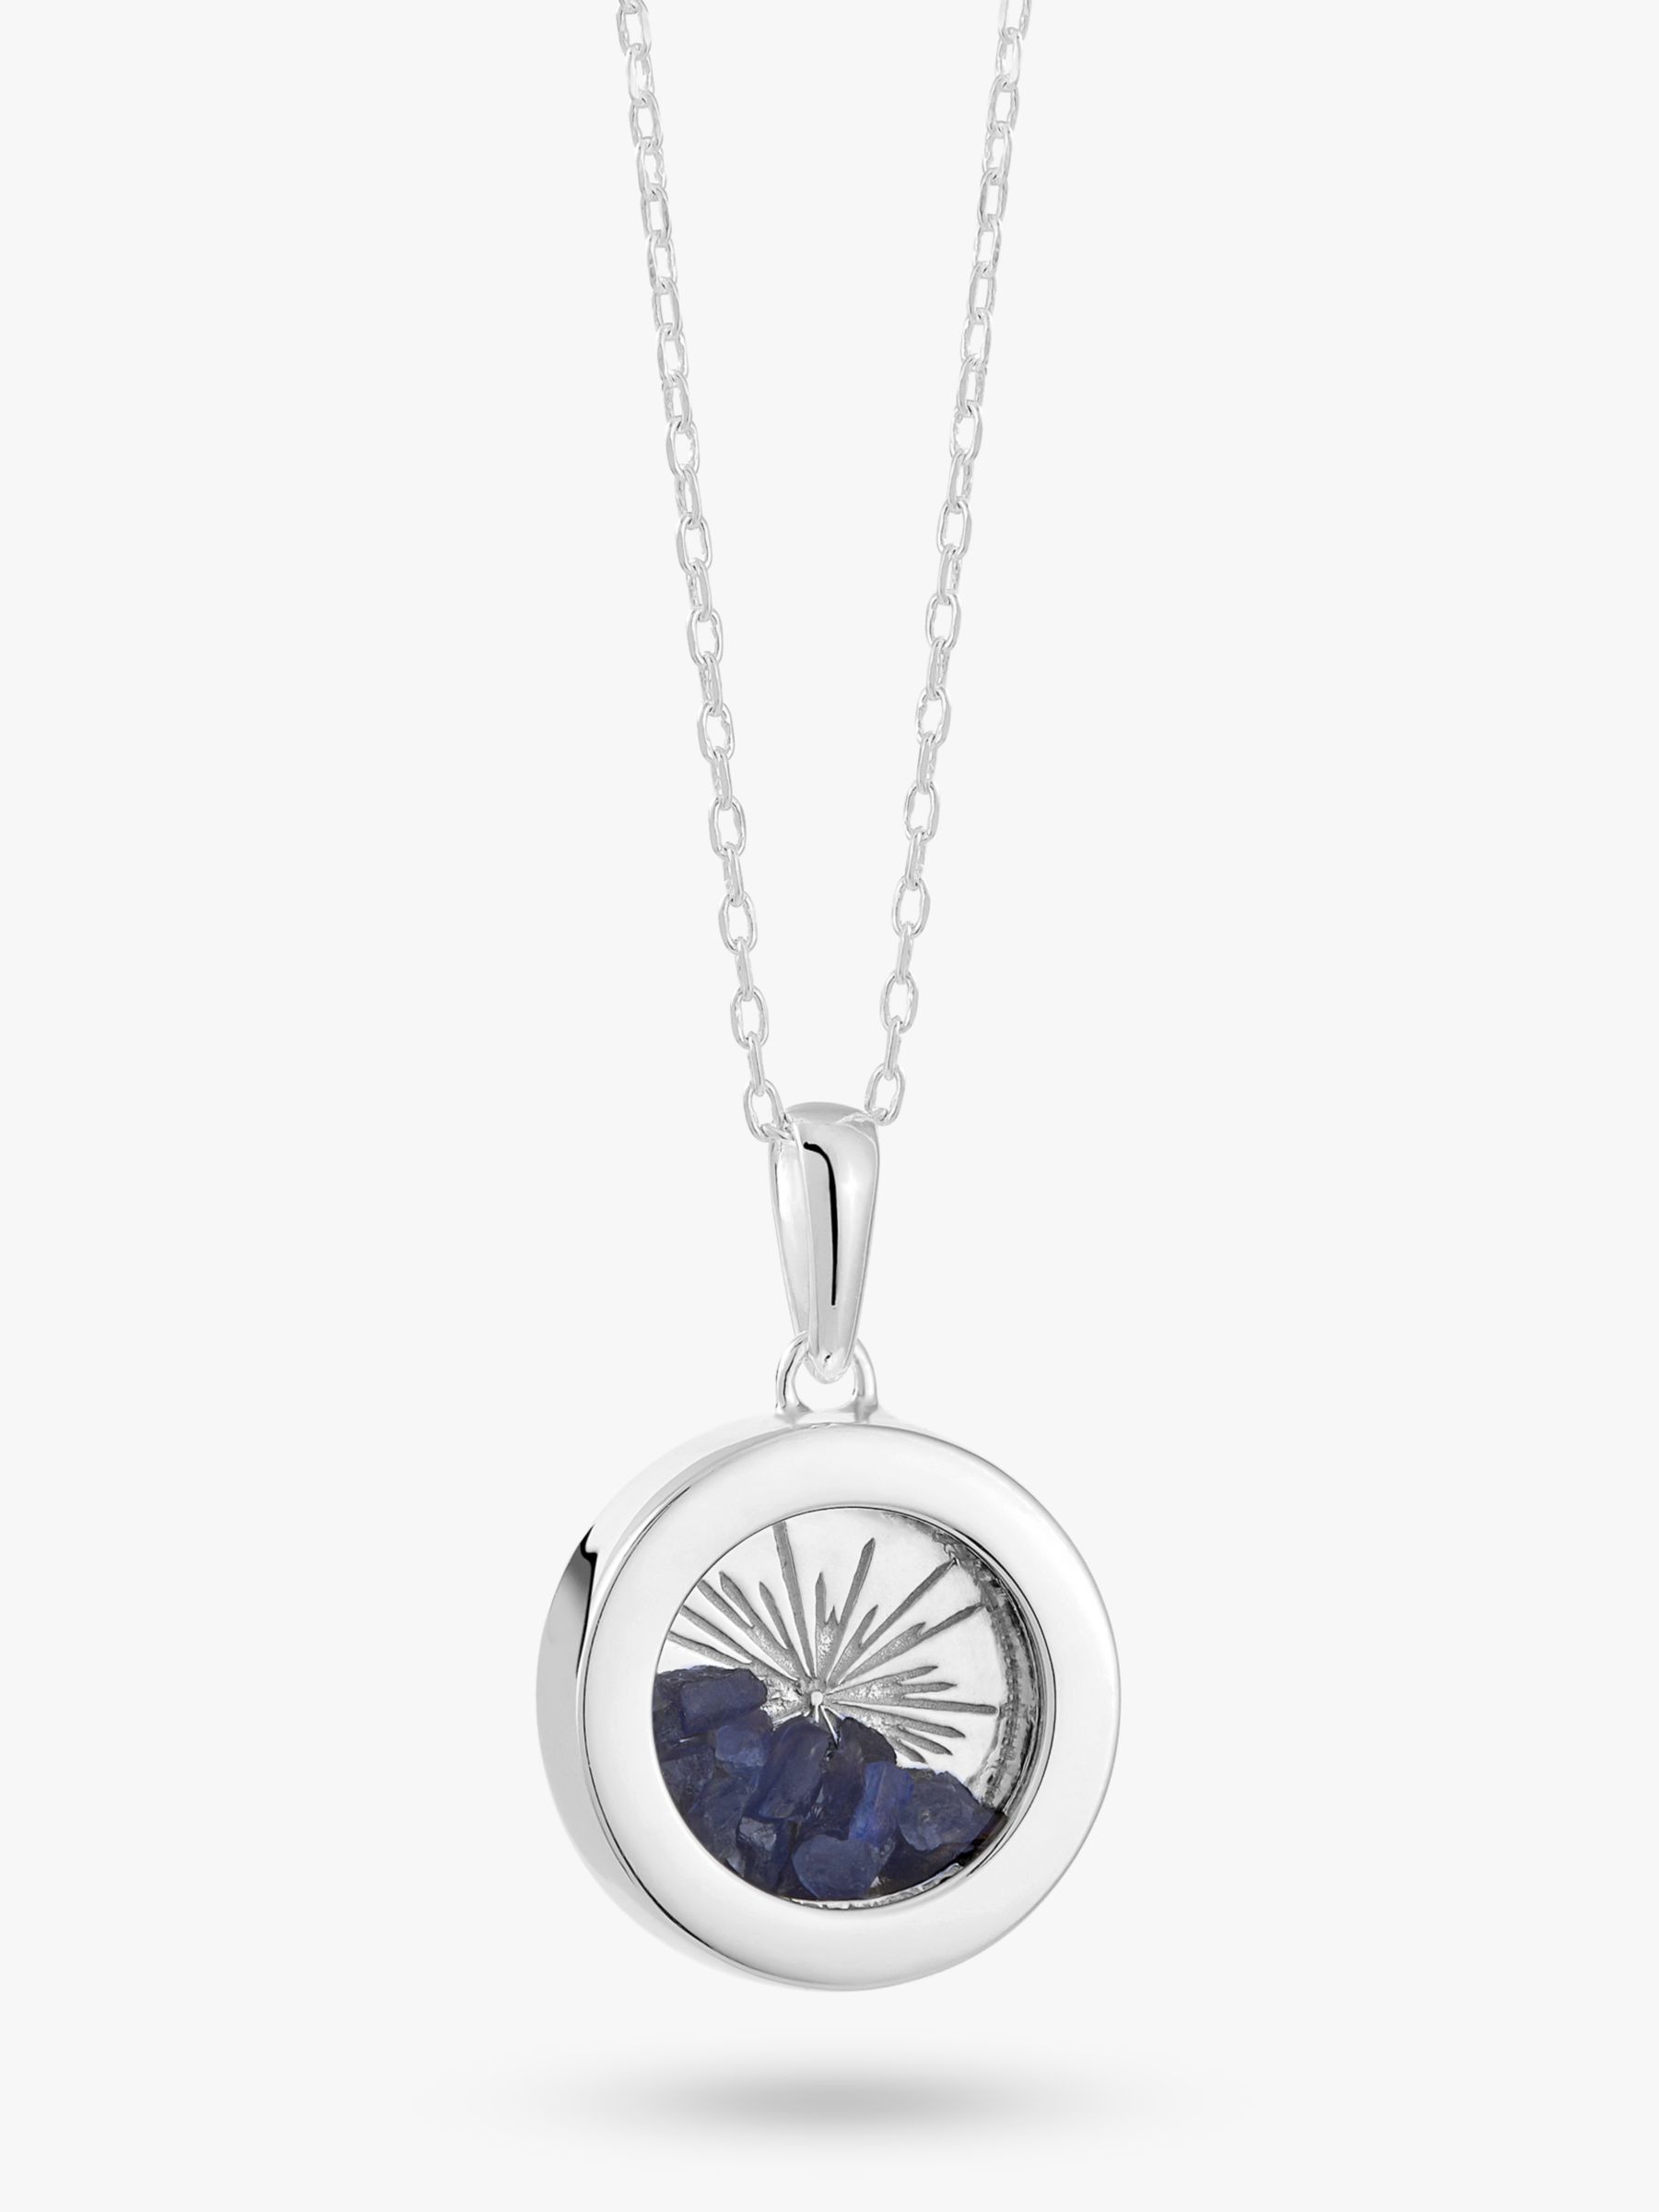 Rachel Jackson London Personalised Small Deco Sun Birthstone Amulet Necklace, Silver, Sapphire - September